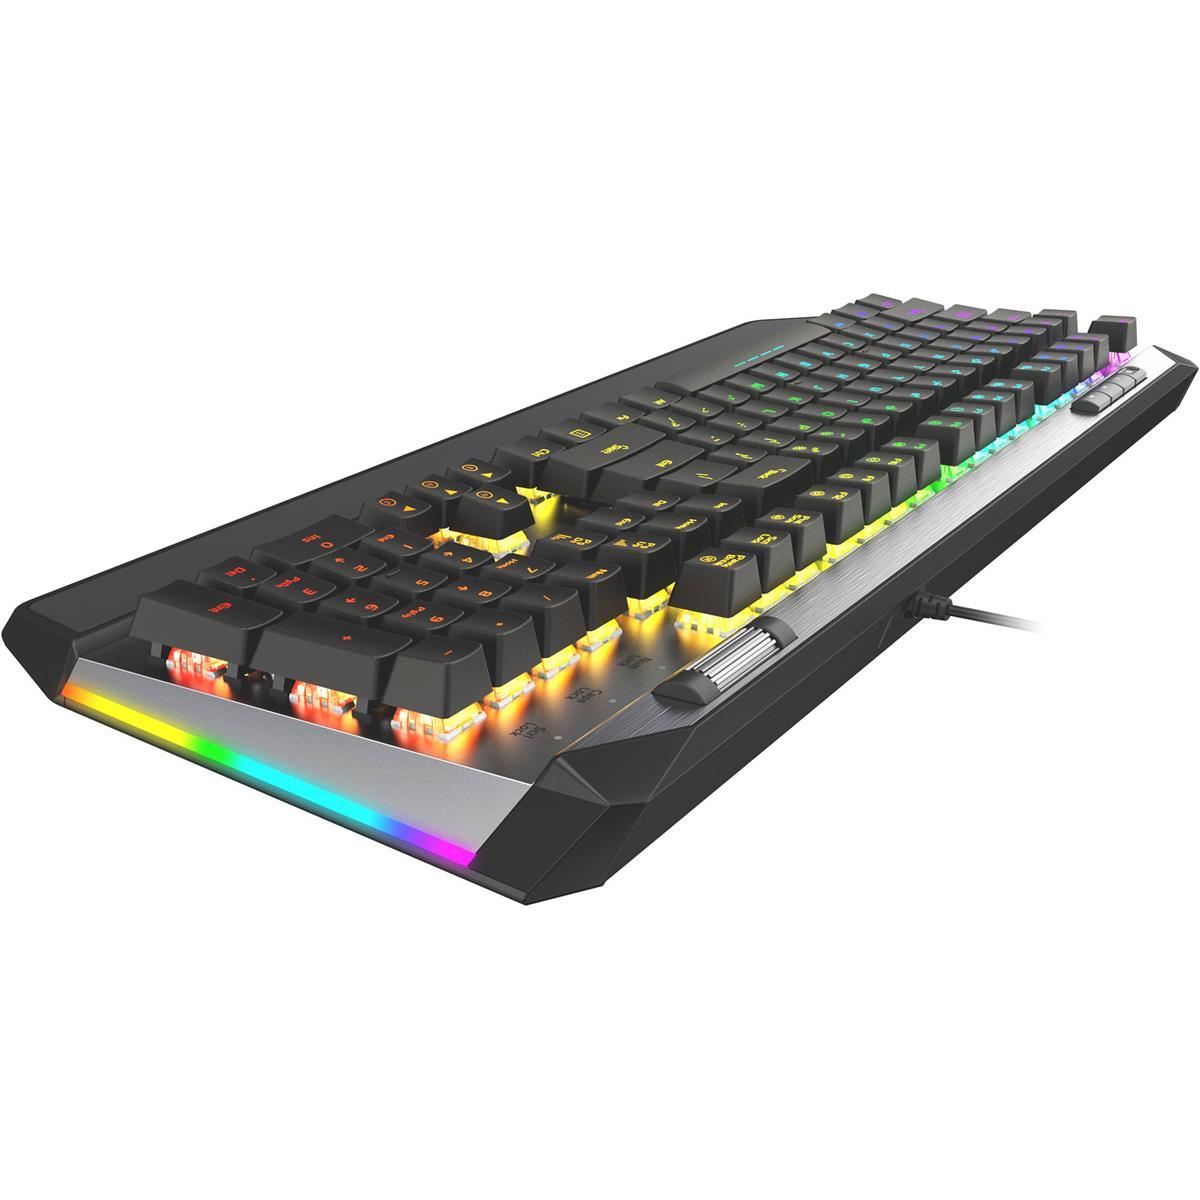 Patriot Viper V765 Wired Mechanical RGB Illuminated Gaming Keyboard